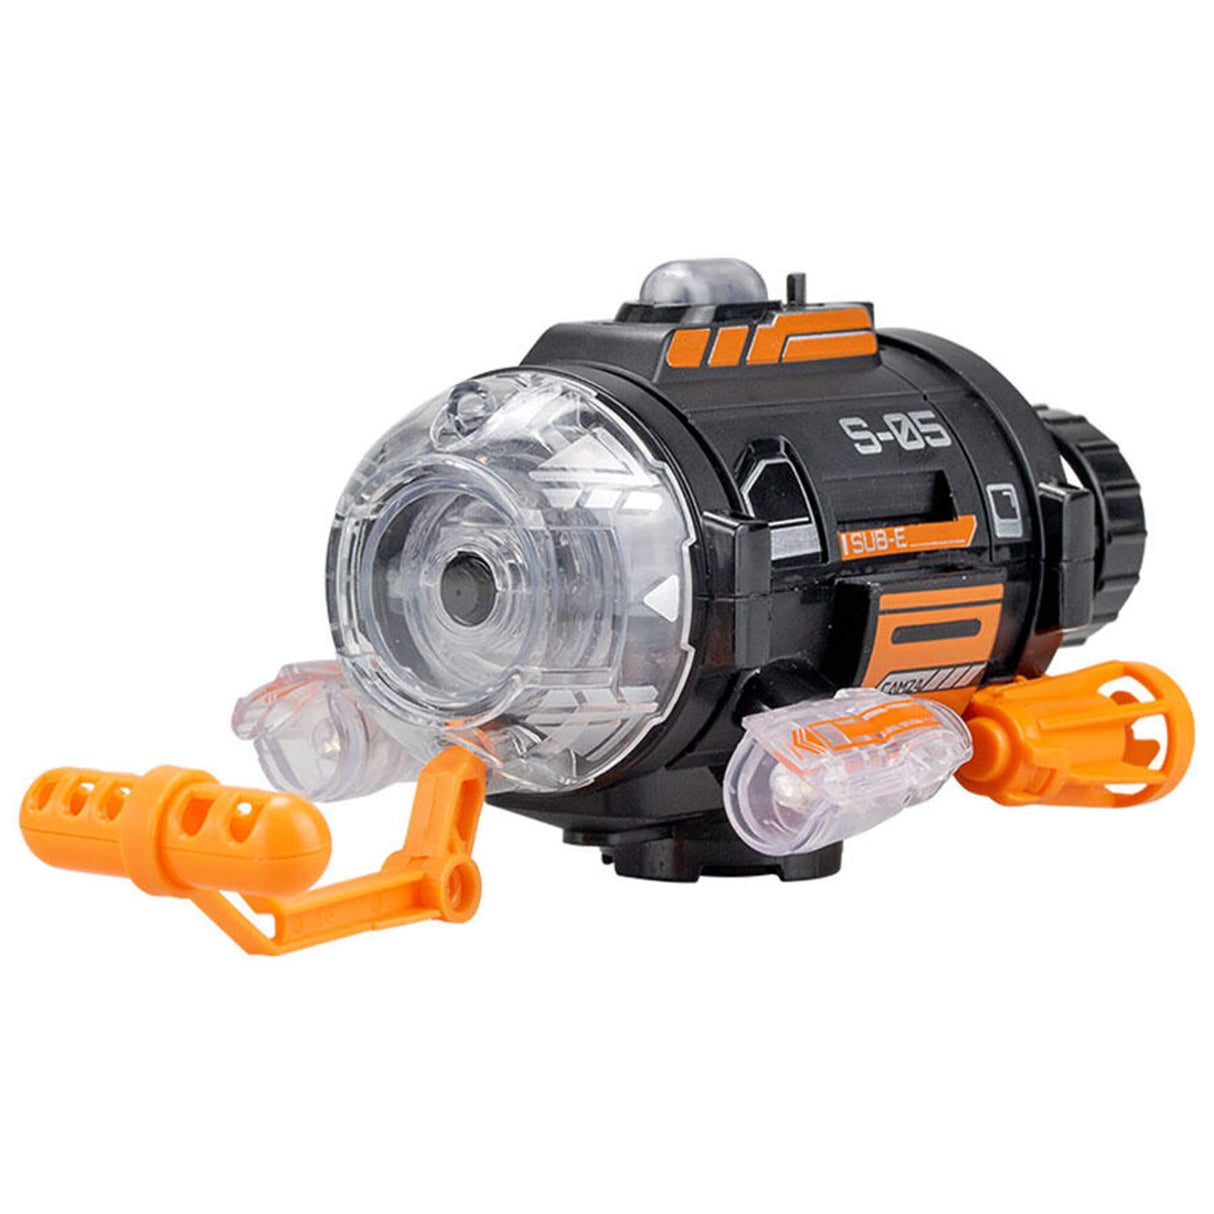 Silverlit 85024 Spycam Aqua HD Toy RC Submarine - Hobbytech Toys